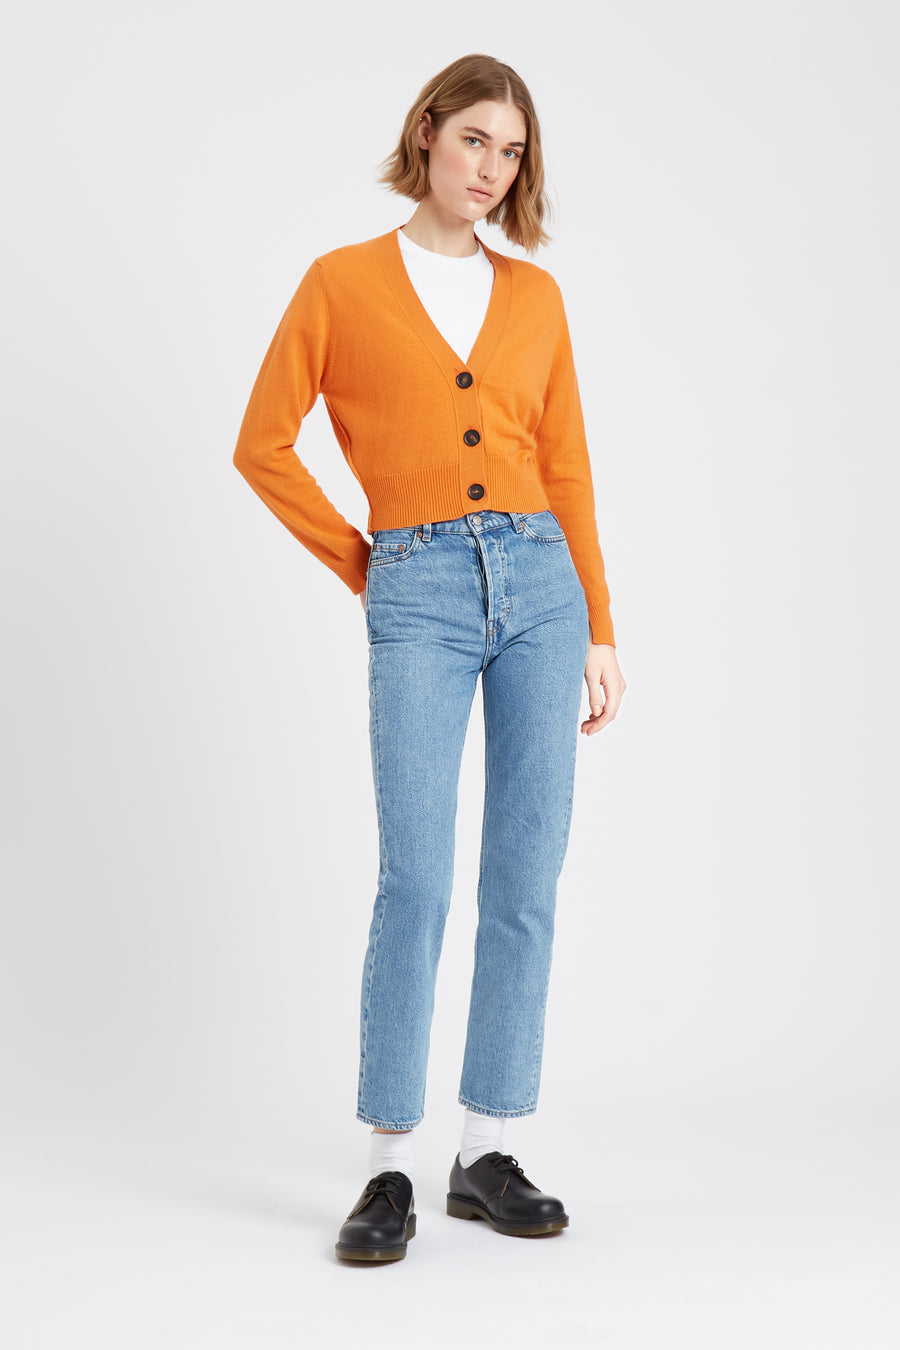 Pringle of Scotland Women's Cropped Cashmere Cardigan In Burnt Orange on model full length